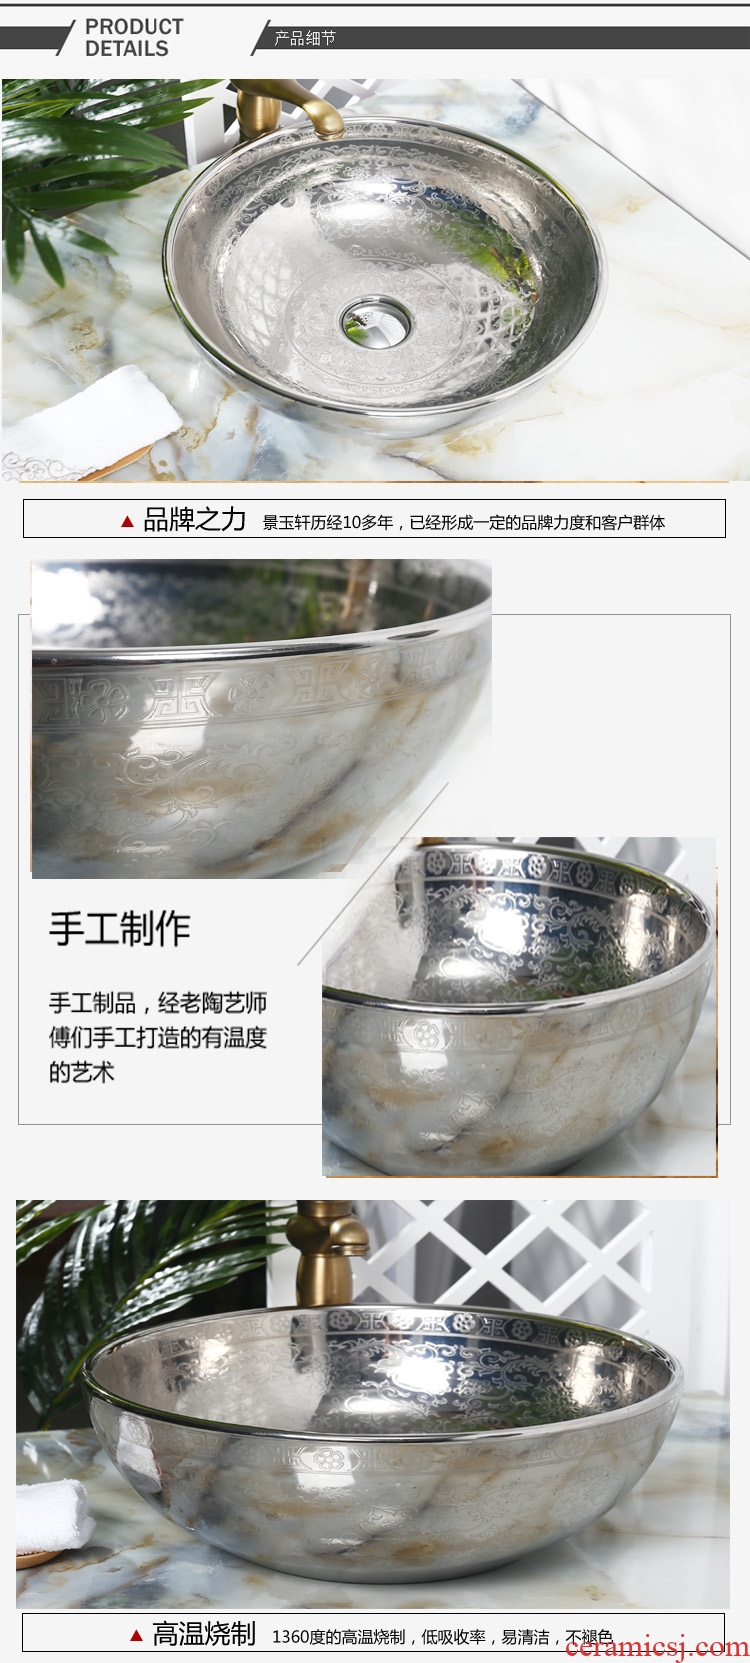 JingYuXuan ceramic lavatory basin basin sink art on silver shadow fashion contracted birdbath